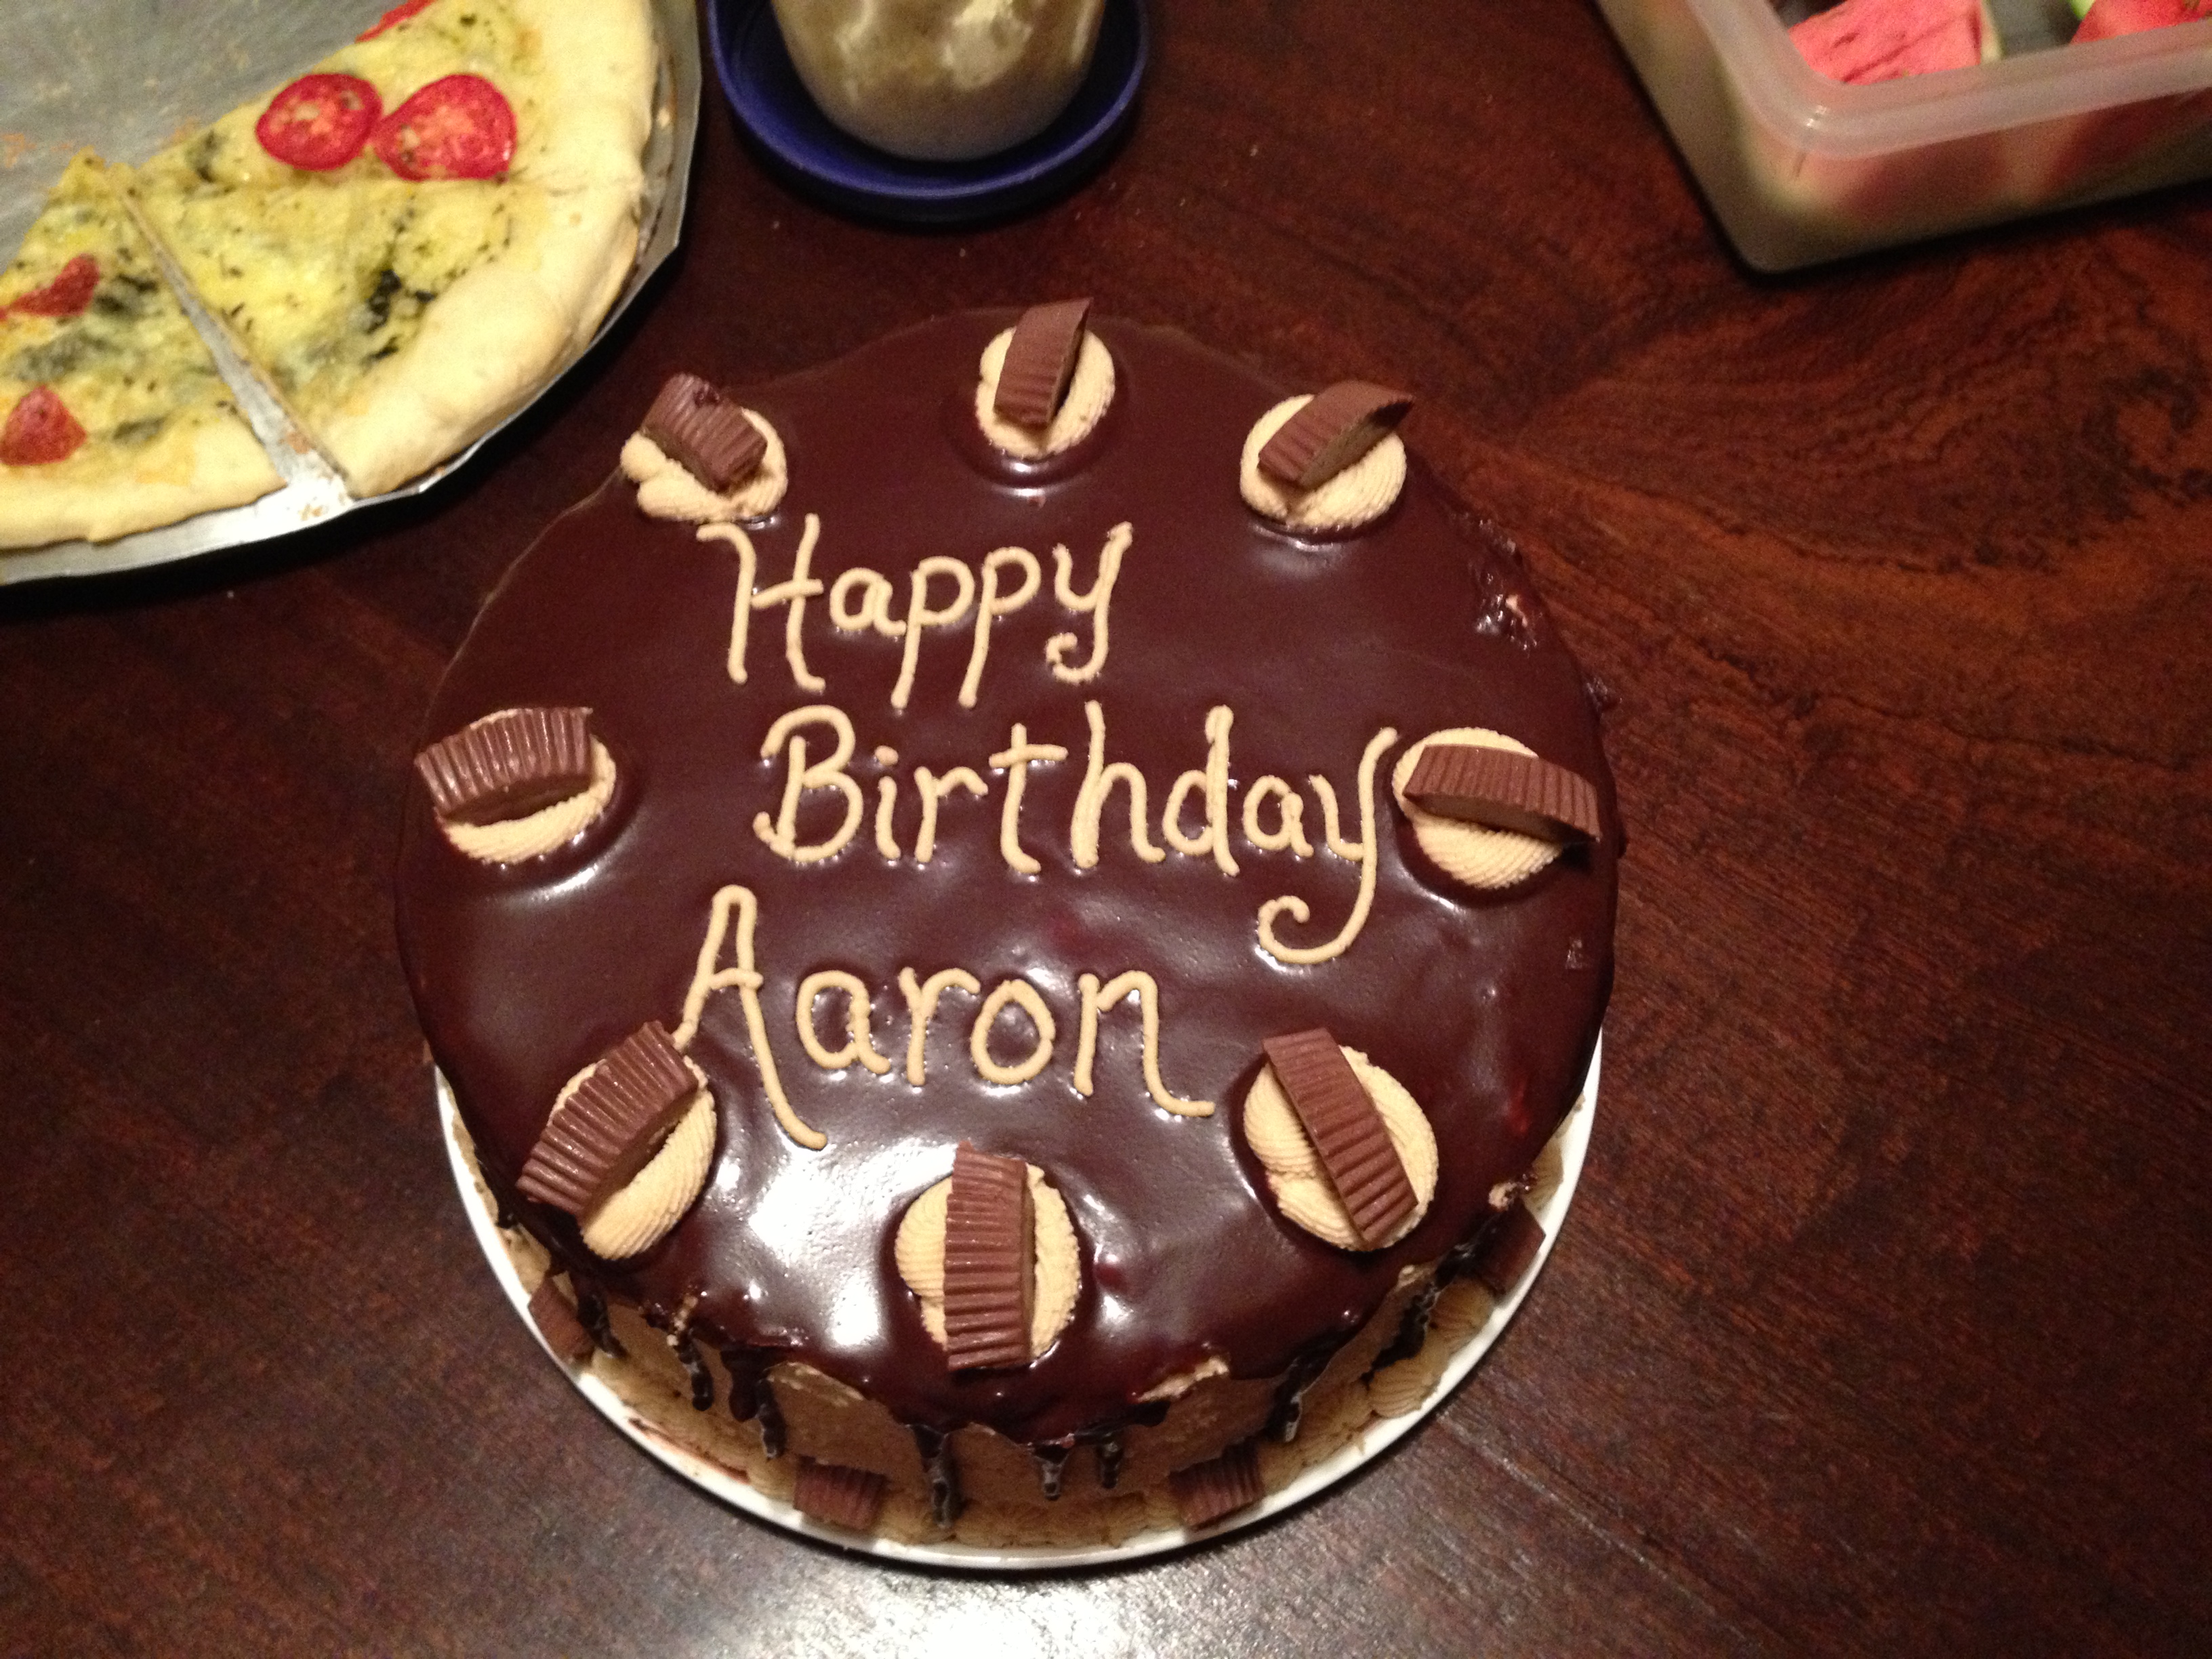 Aaron Cake by Aaron Cake | Bridestory.com